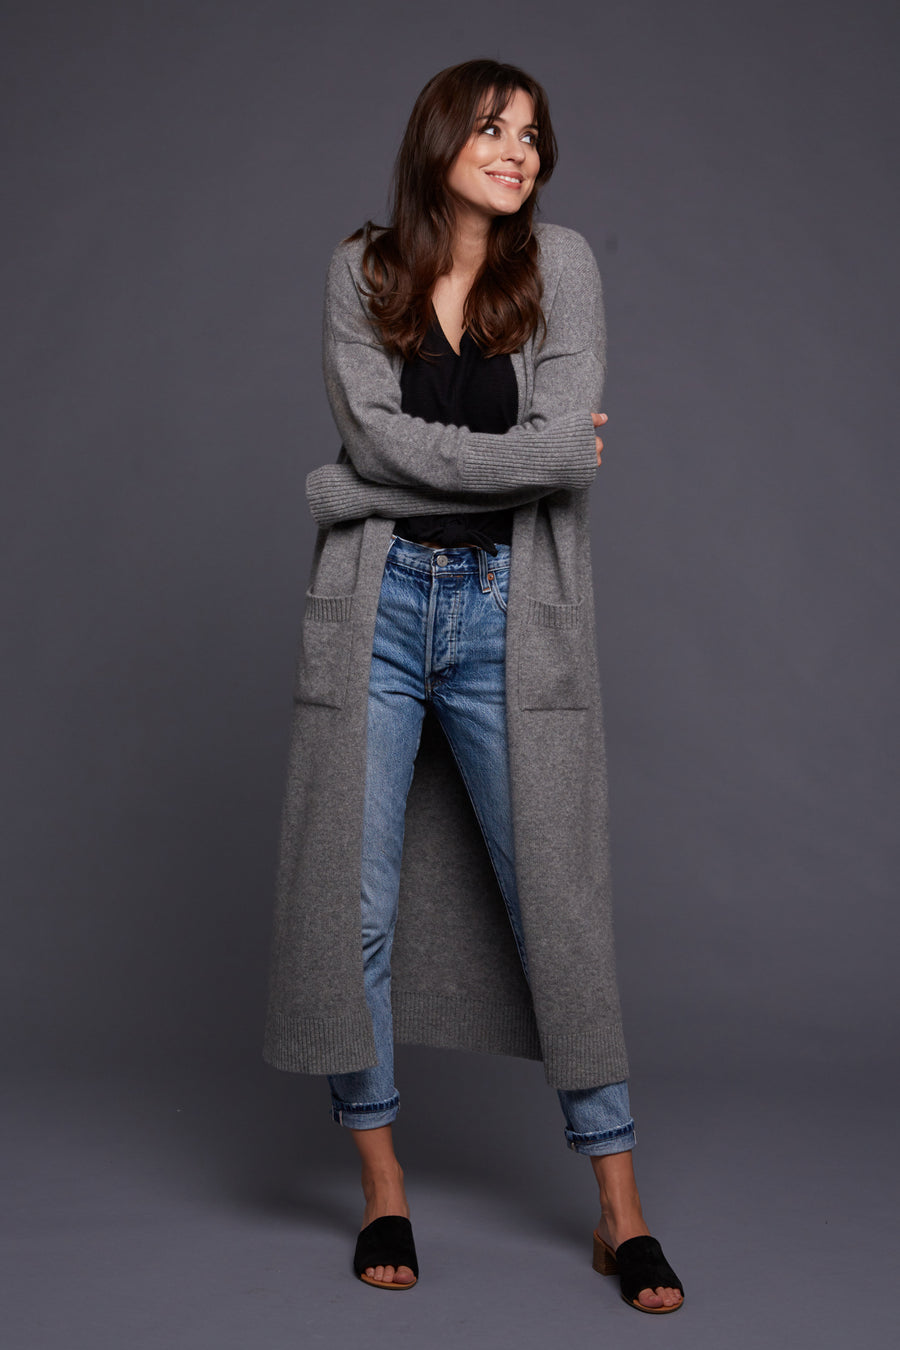 pine cashmere stella women's cashmere wool blend long cardigan coat duster in medium grey